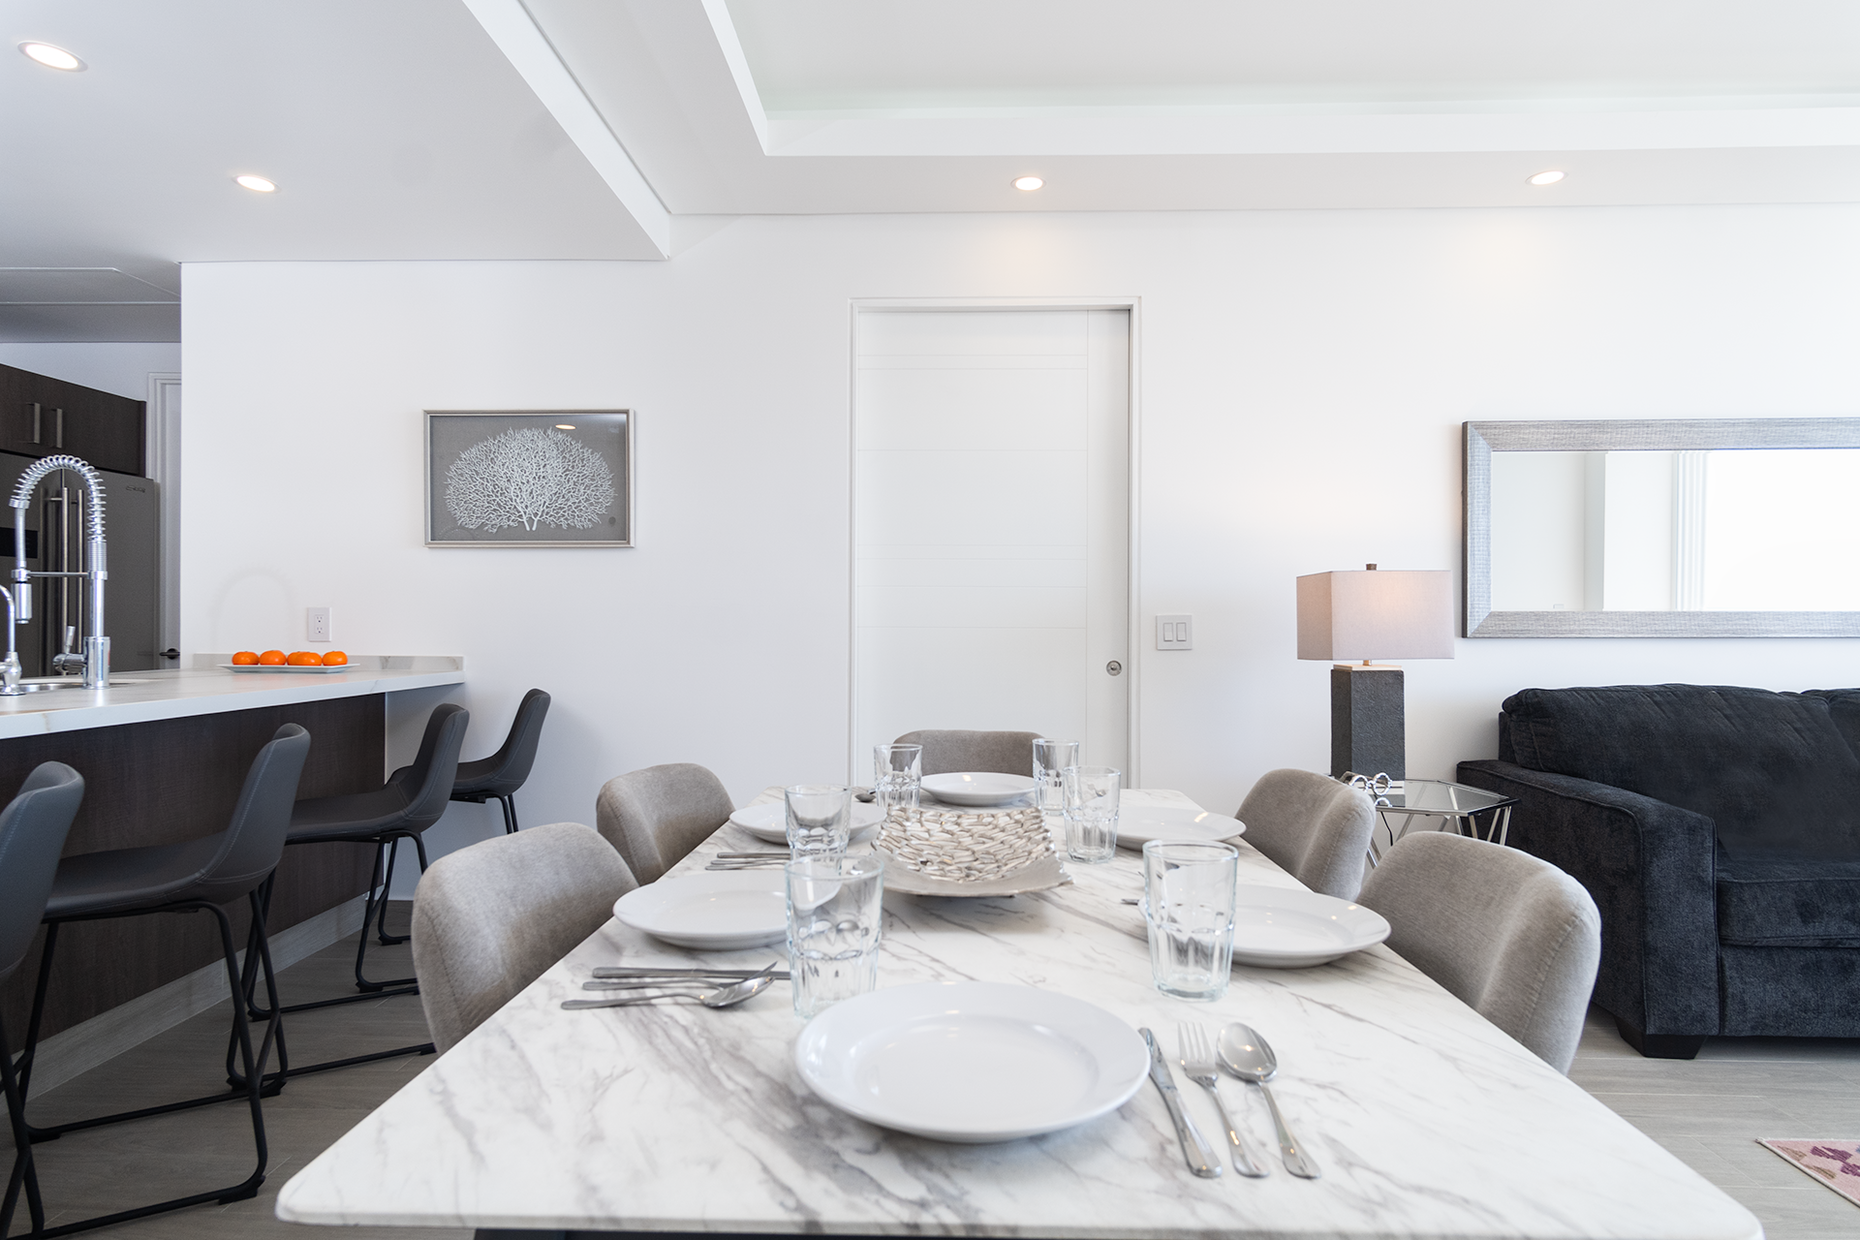 Elegant granite dining table accommodates 6.